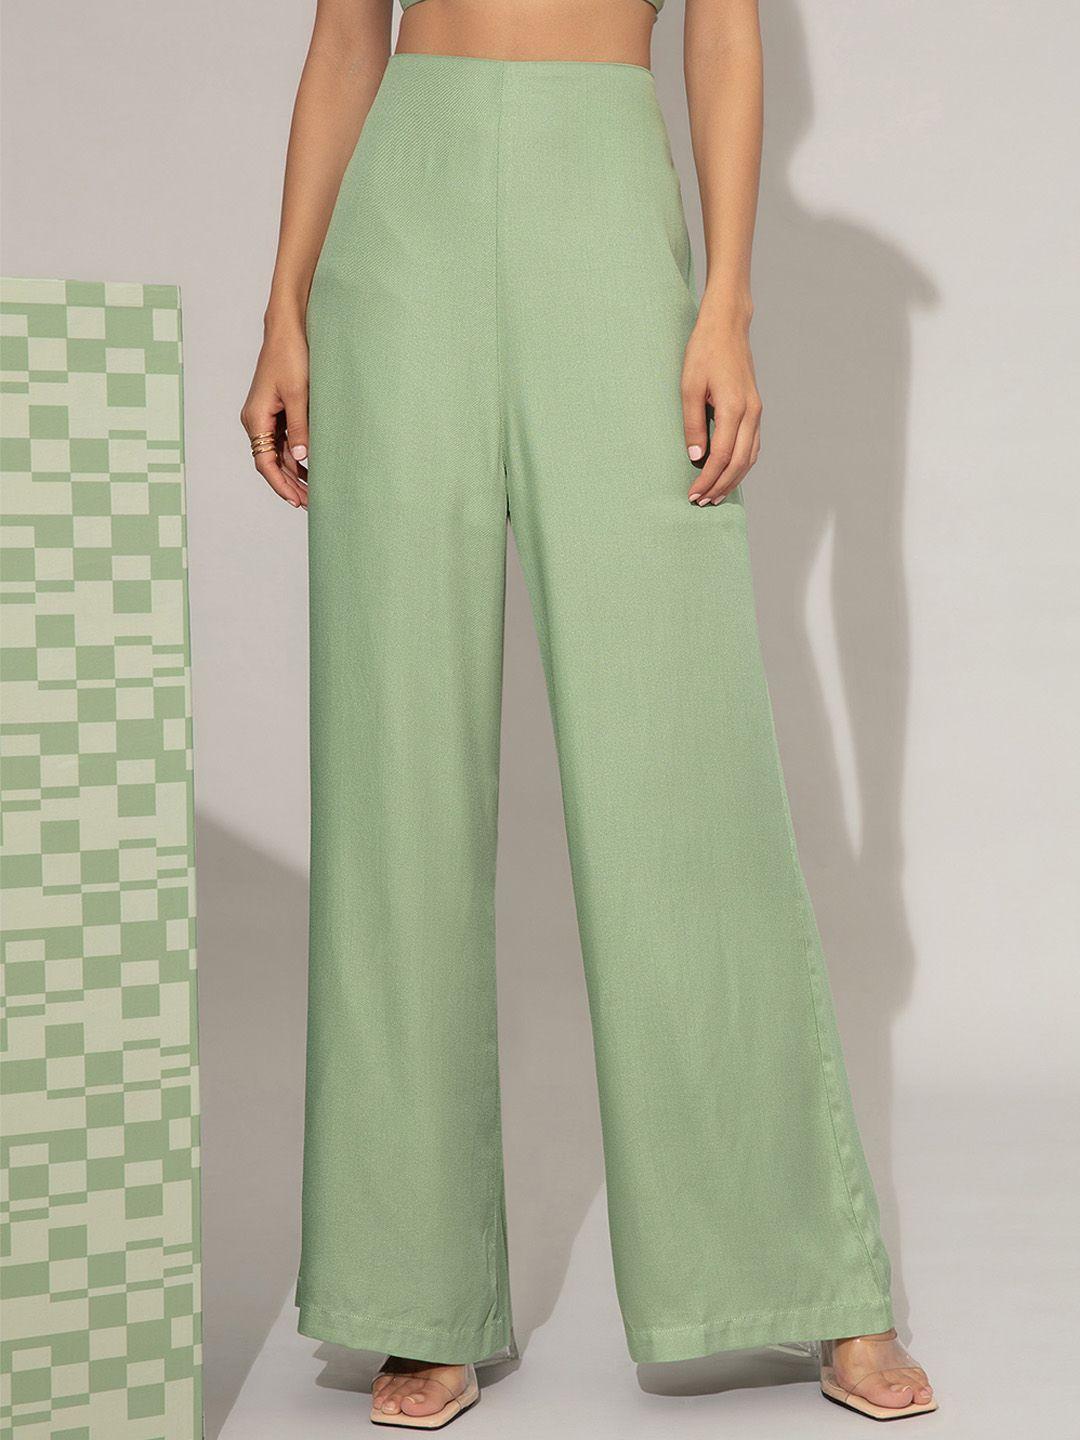 20dresses women green flared high-rise trouser